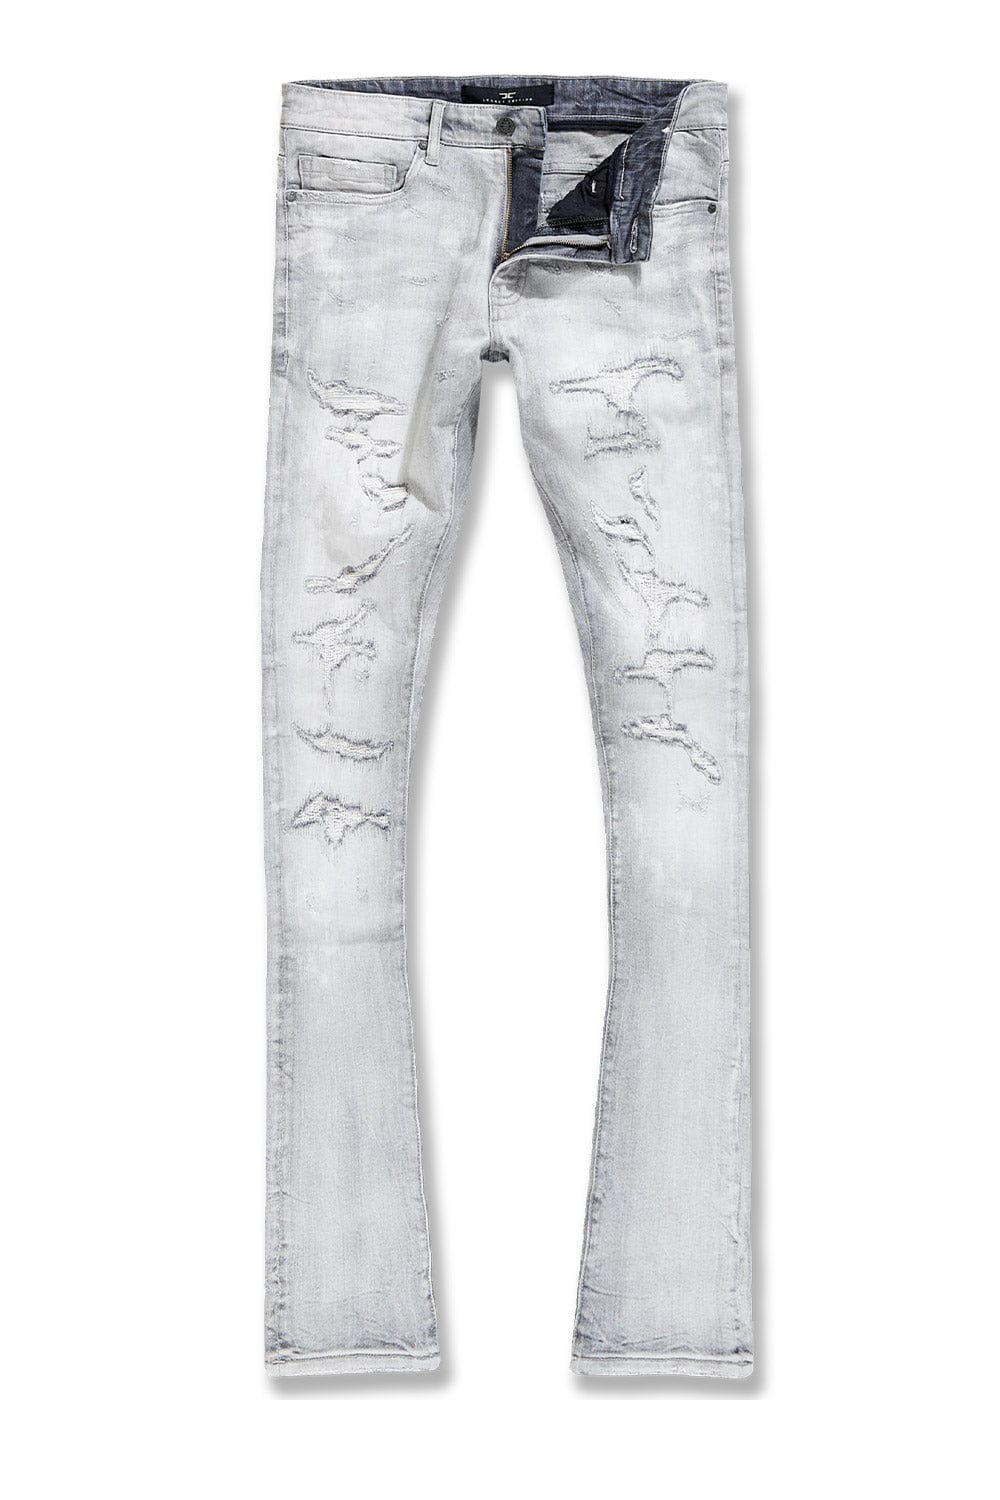 Jordan Craig Grey Stacked Jeans